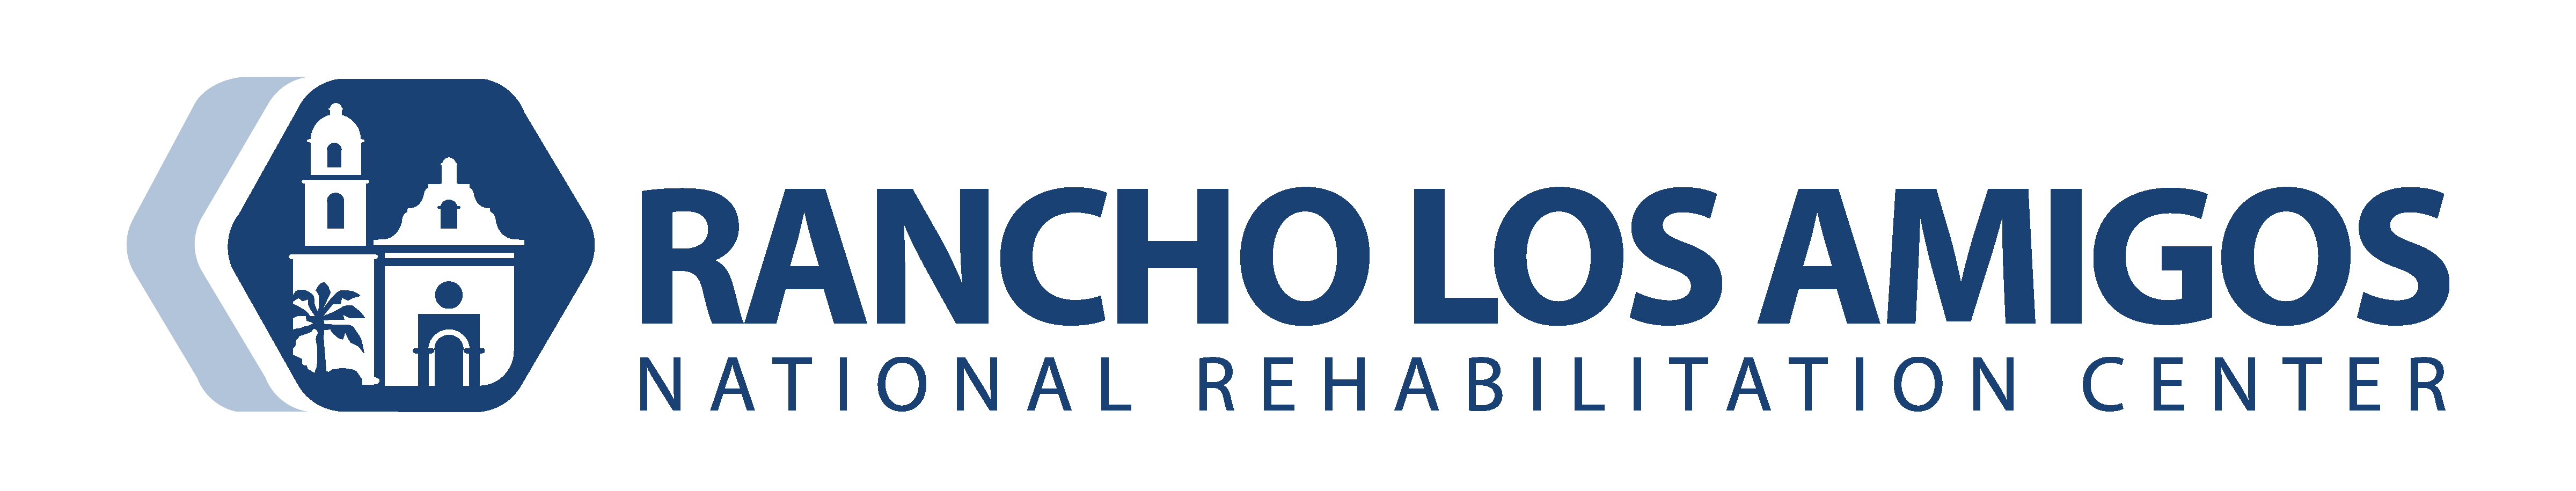 Rancho Los Amigos National Rehabilitation Center